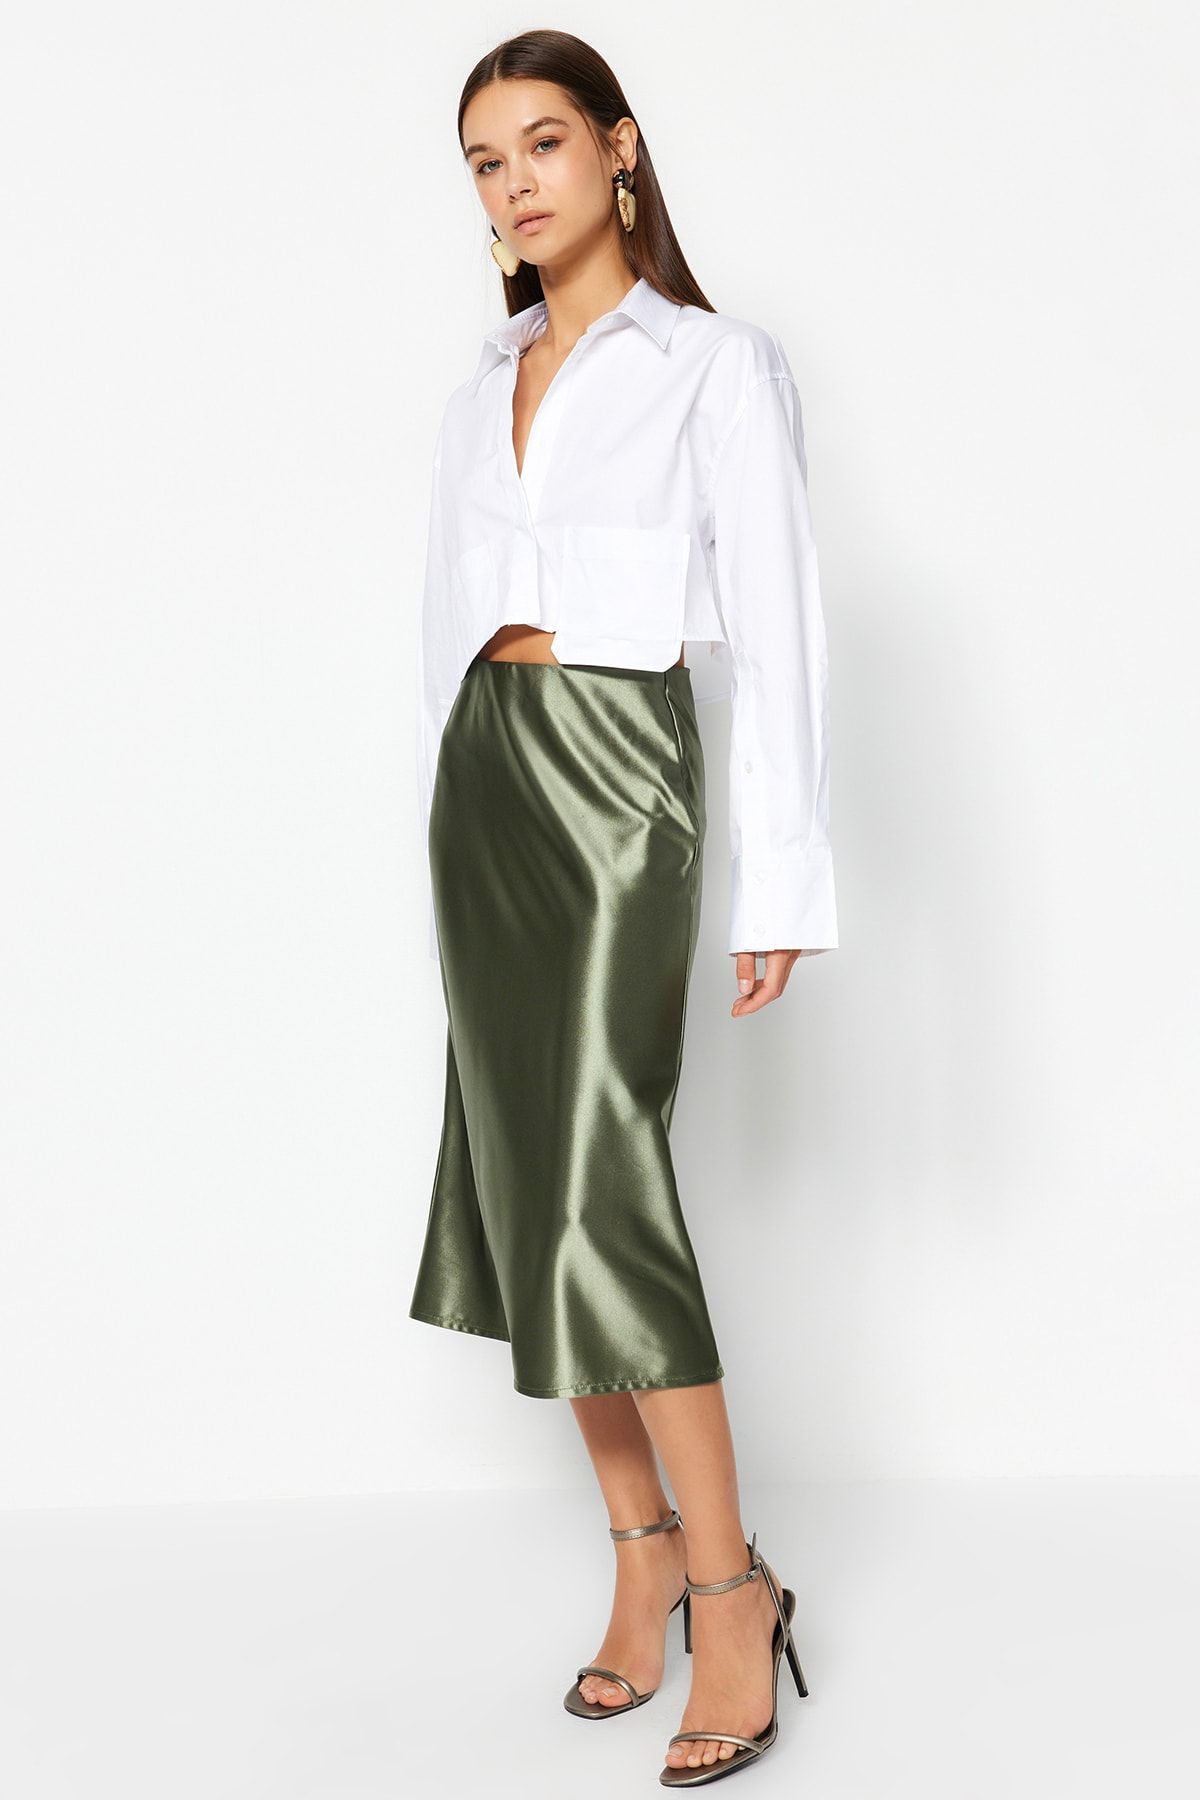 Trendyol Collection Skirt - Green - Midi - Trendyol